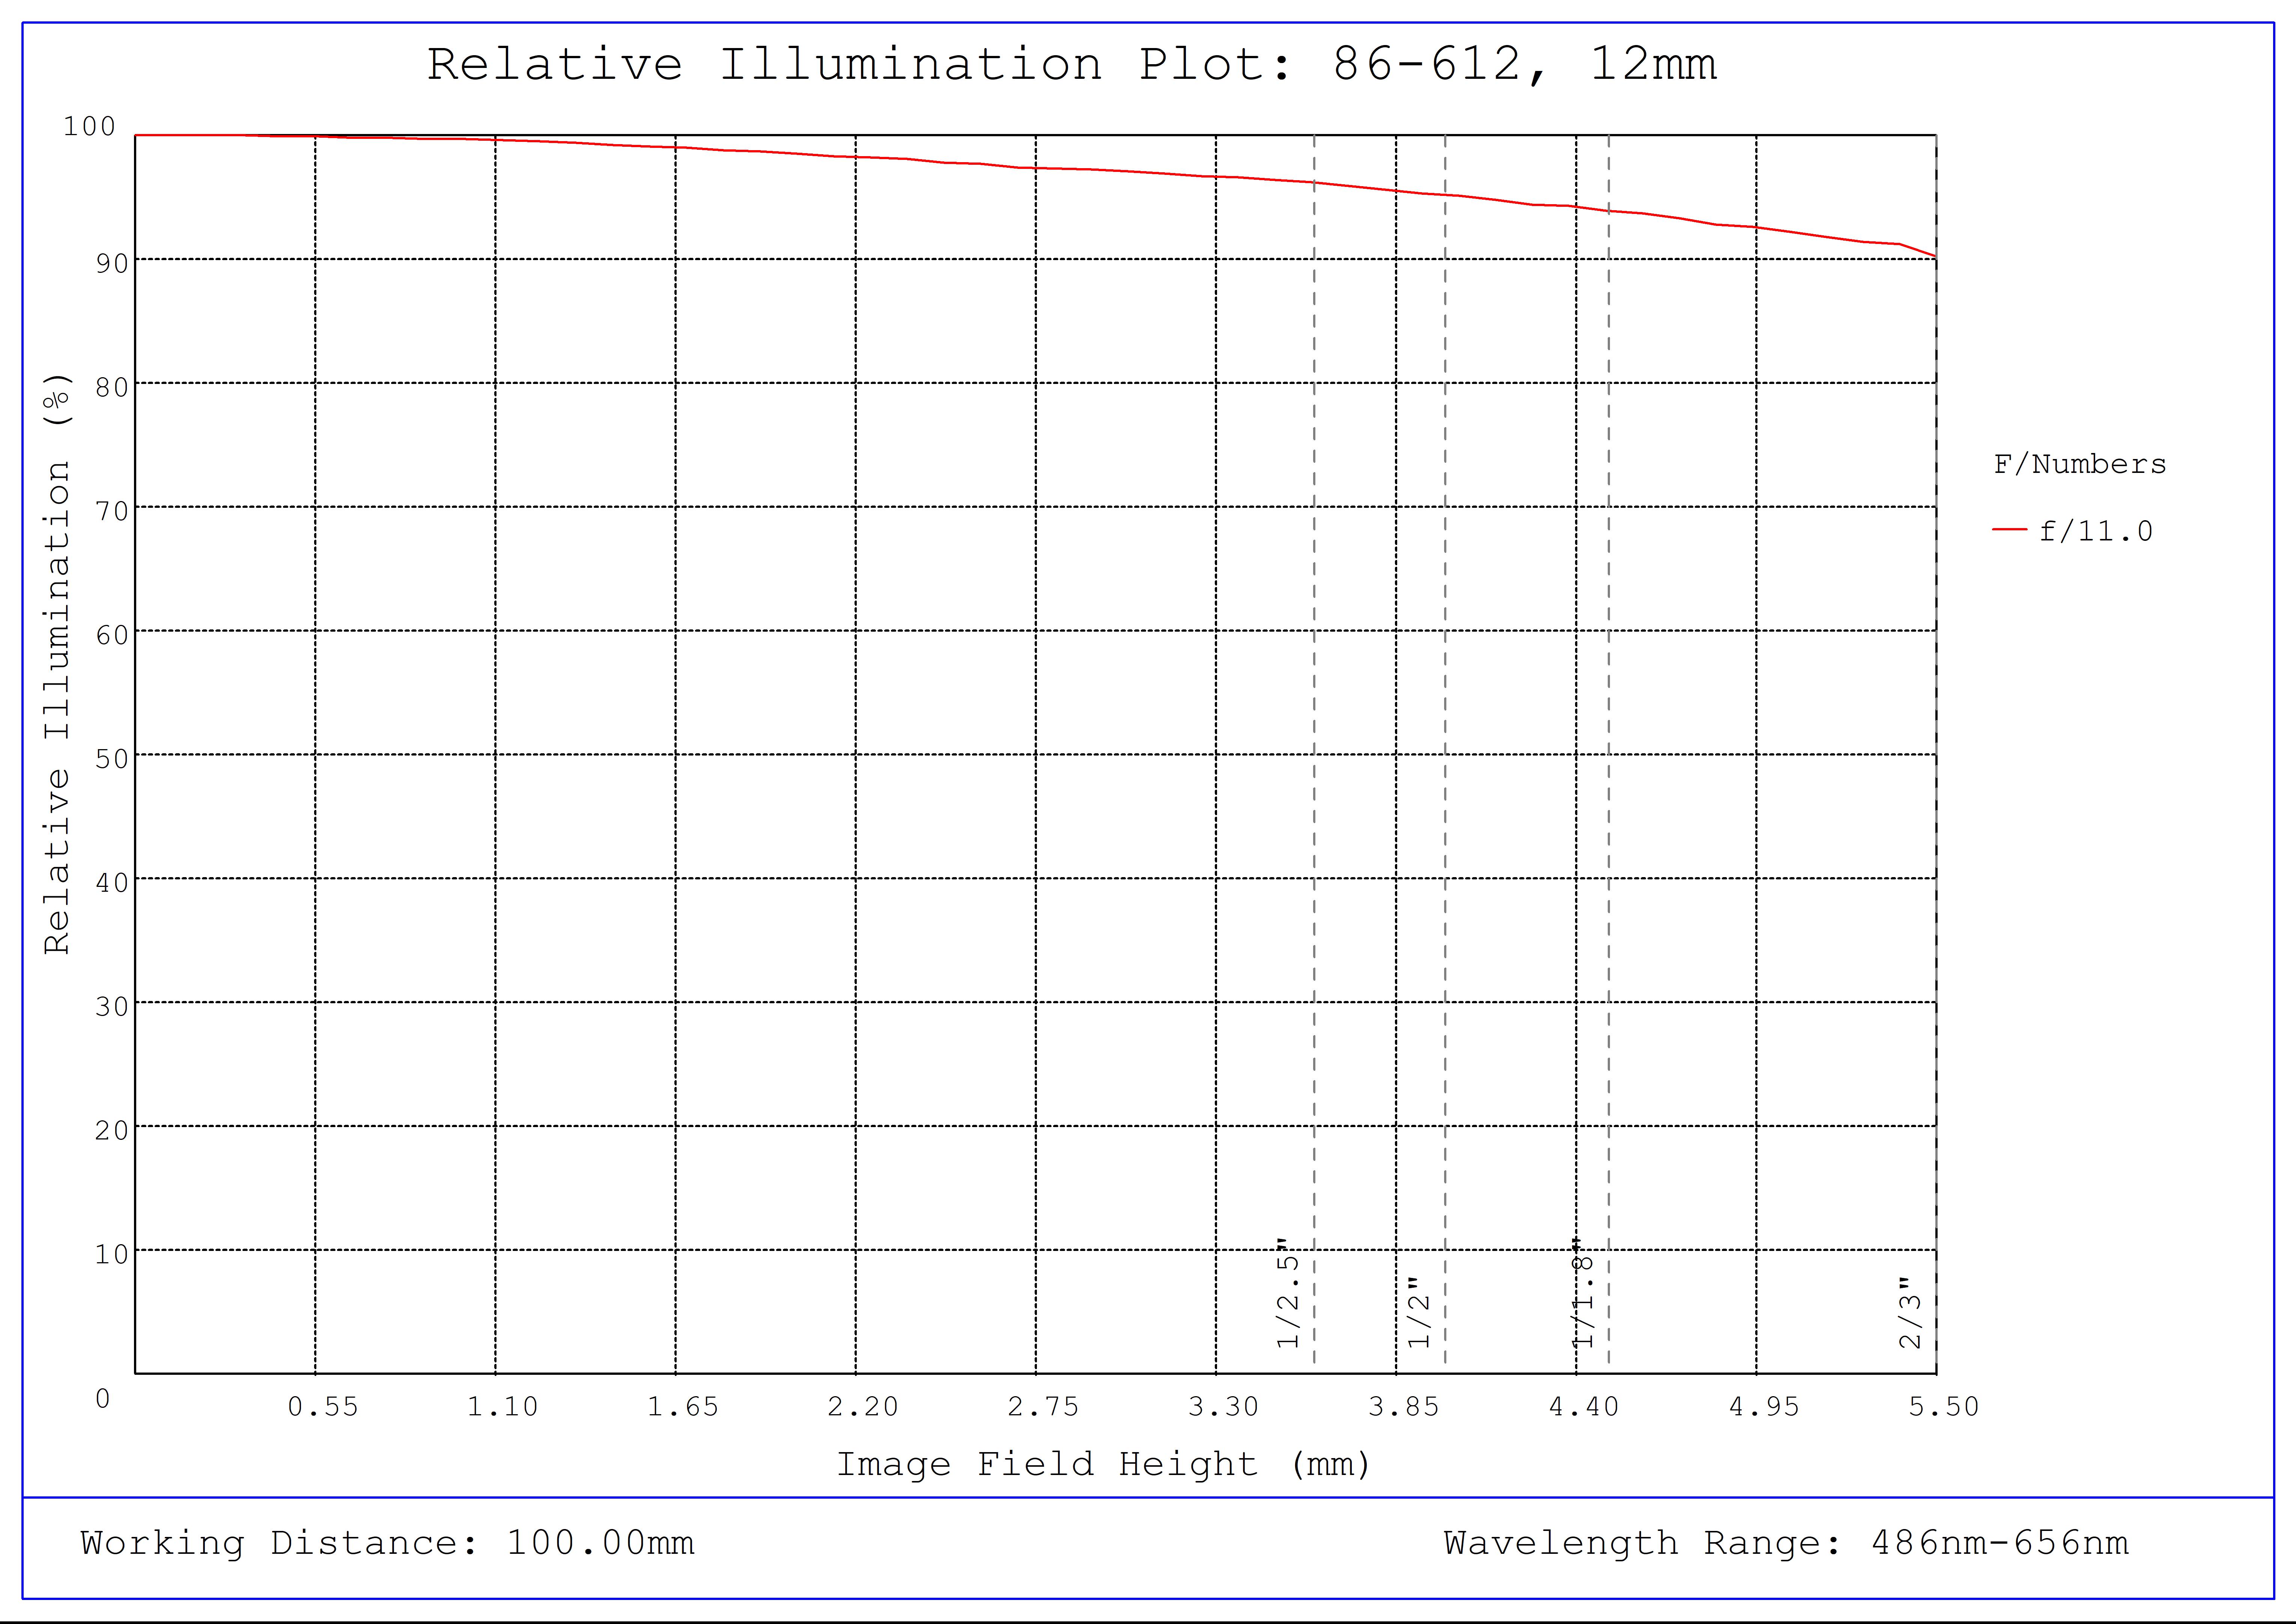 #86-612, 12mm, f/11 Ci Series Fixed Focal Length Lens, Relative Illumination Plot